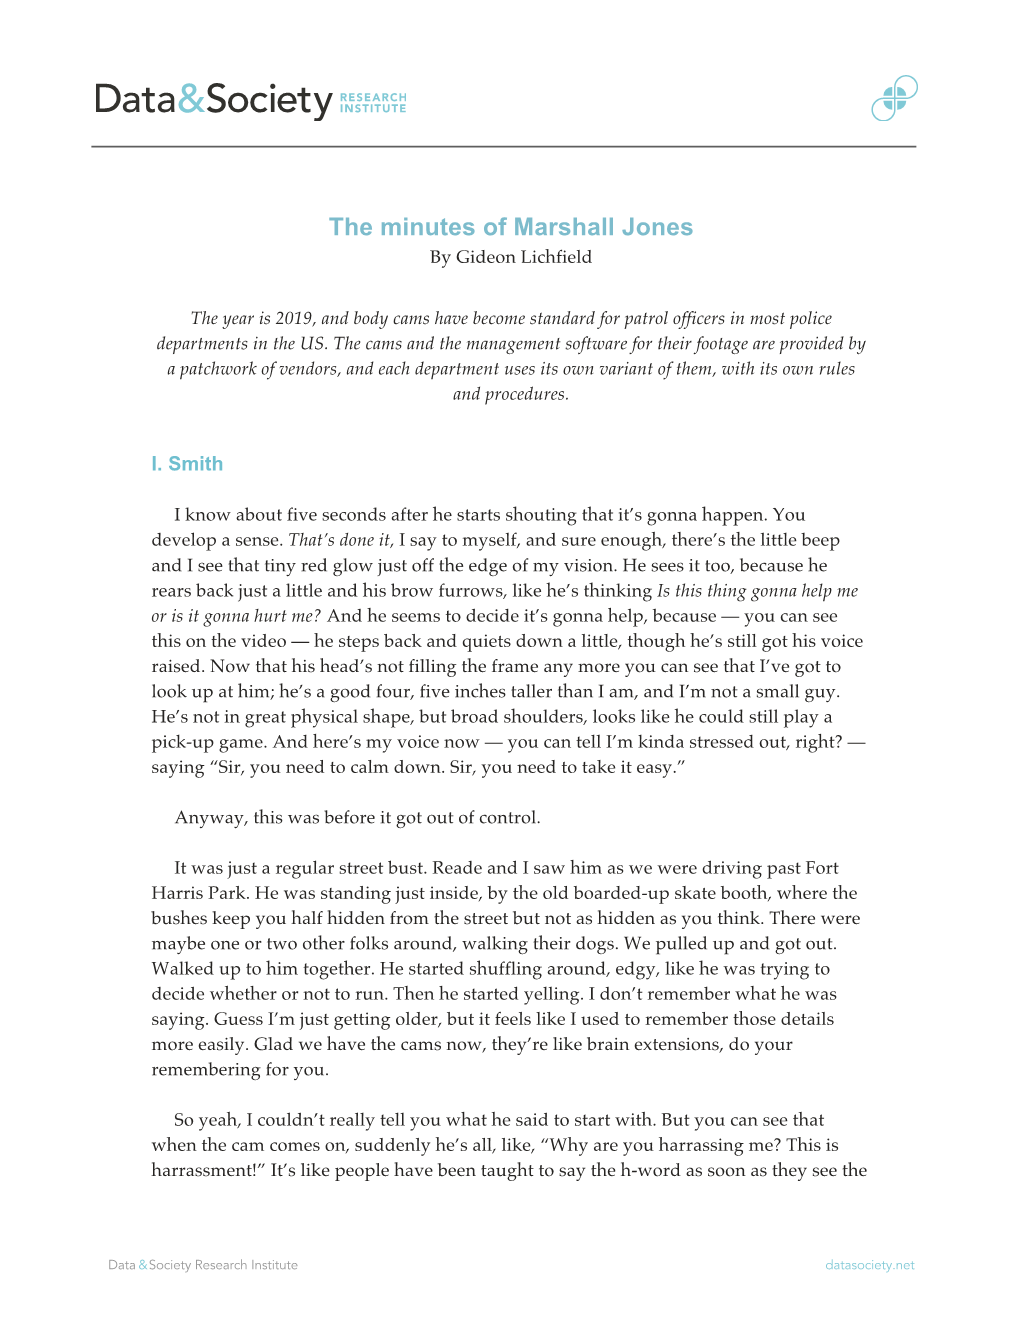 The Minutes of Marshall Jones by Gideon Lichfield